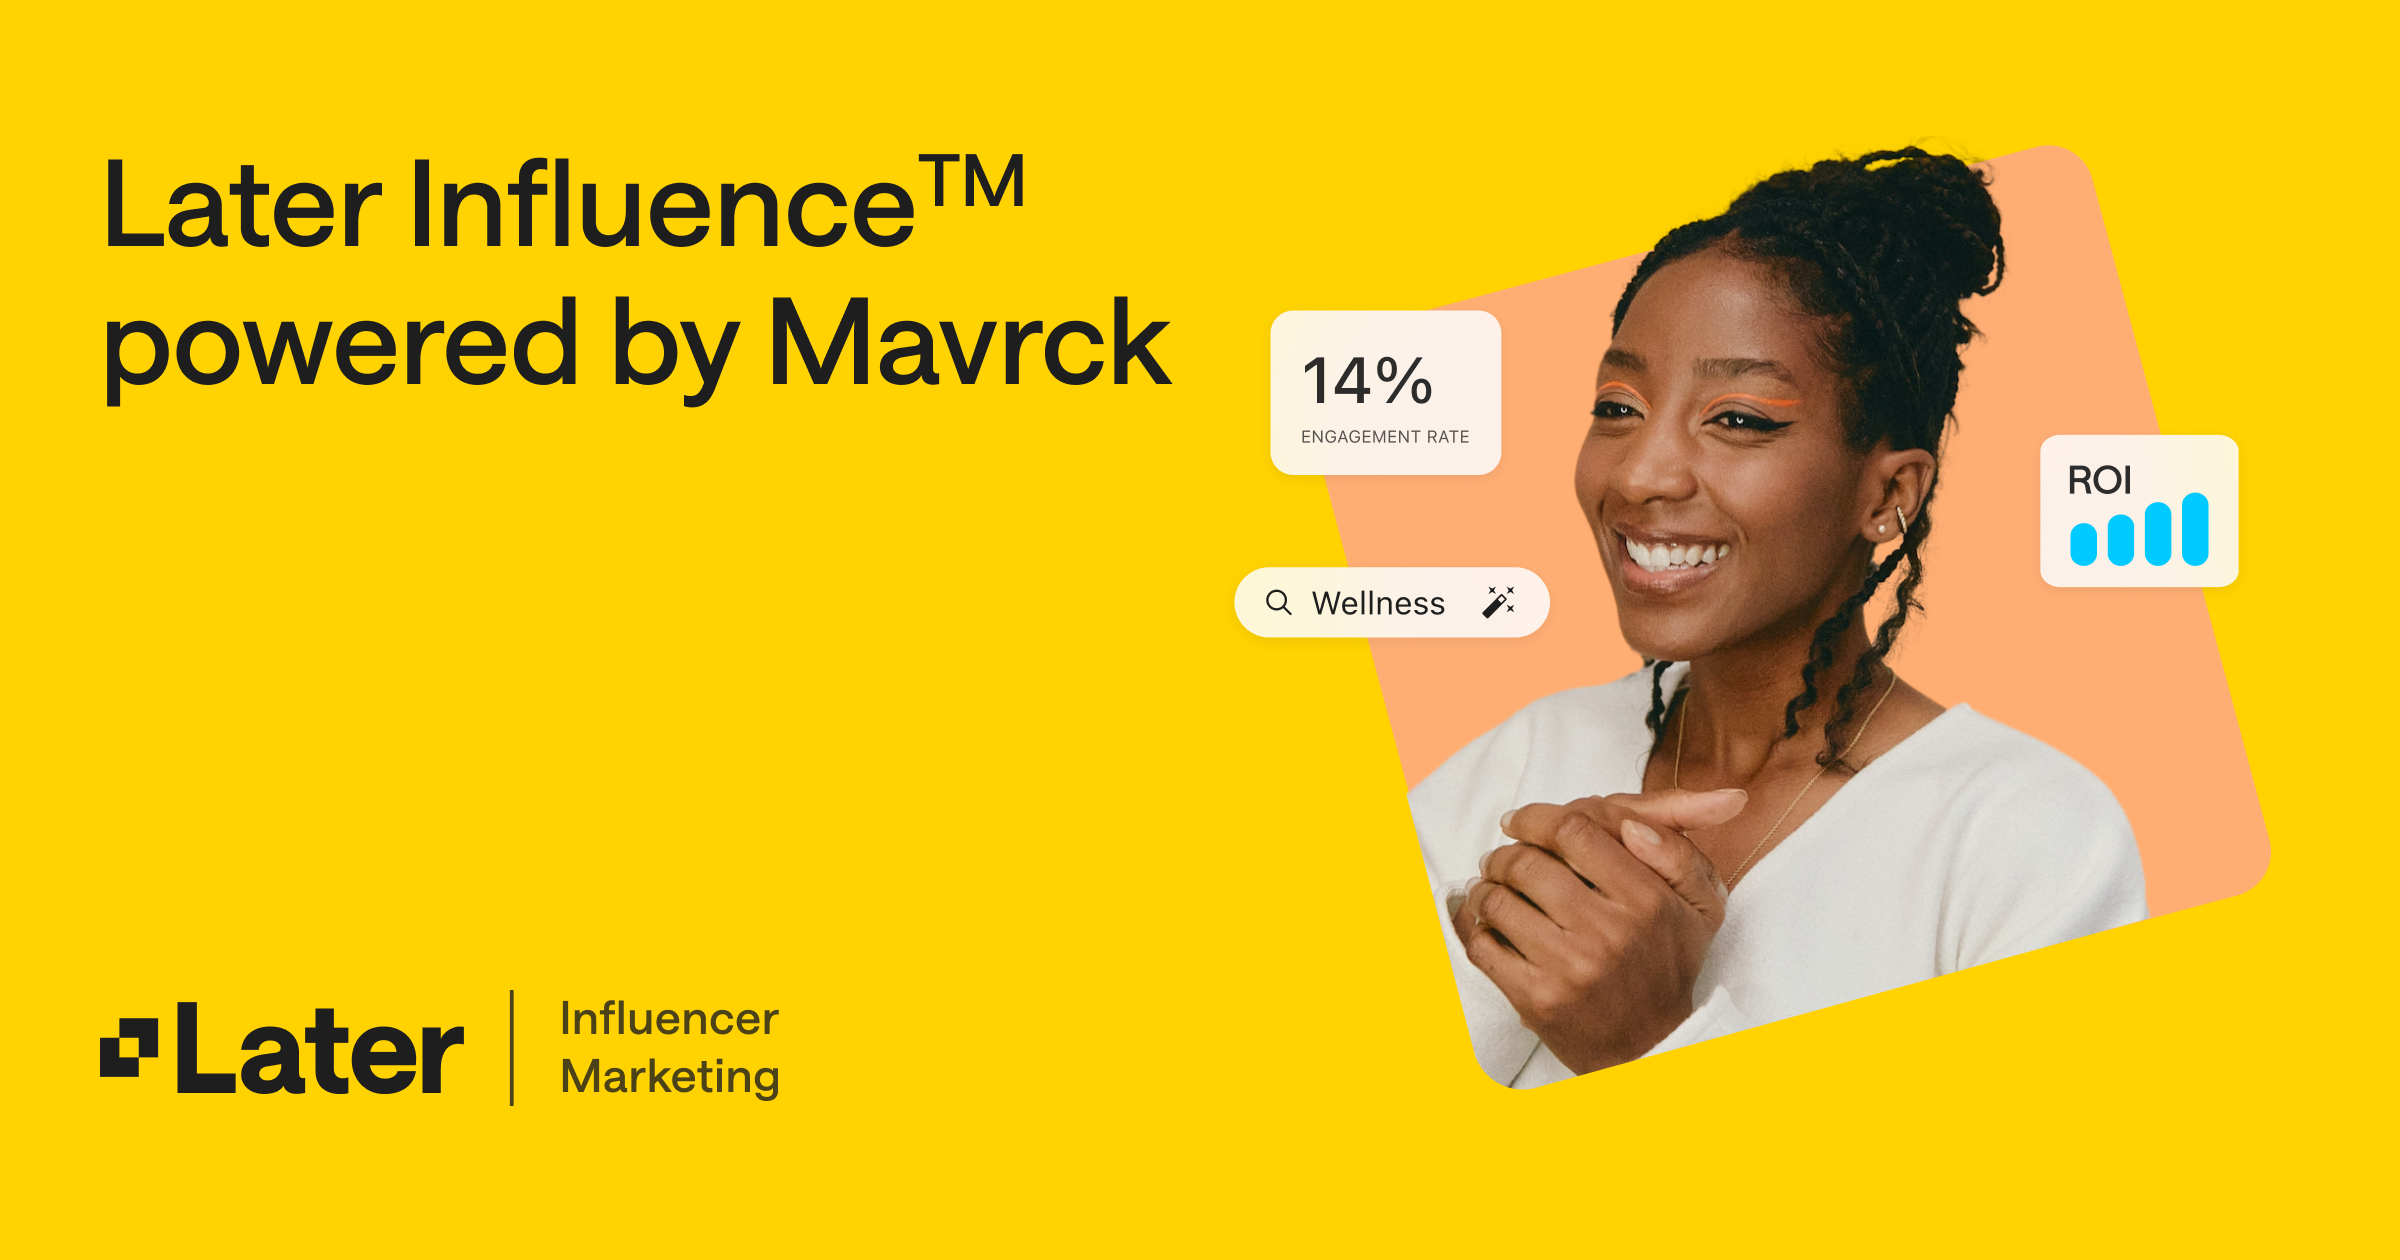 Later Influence: The Best Influencer Marketing Platform